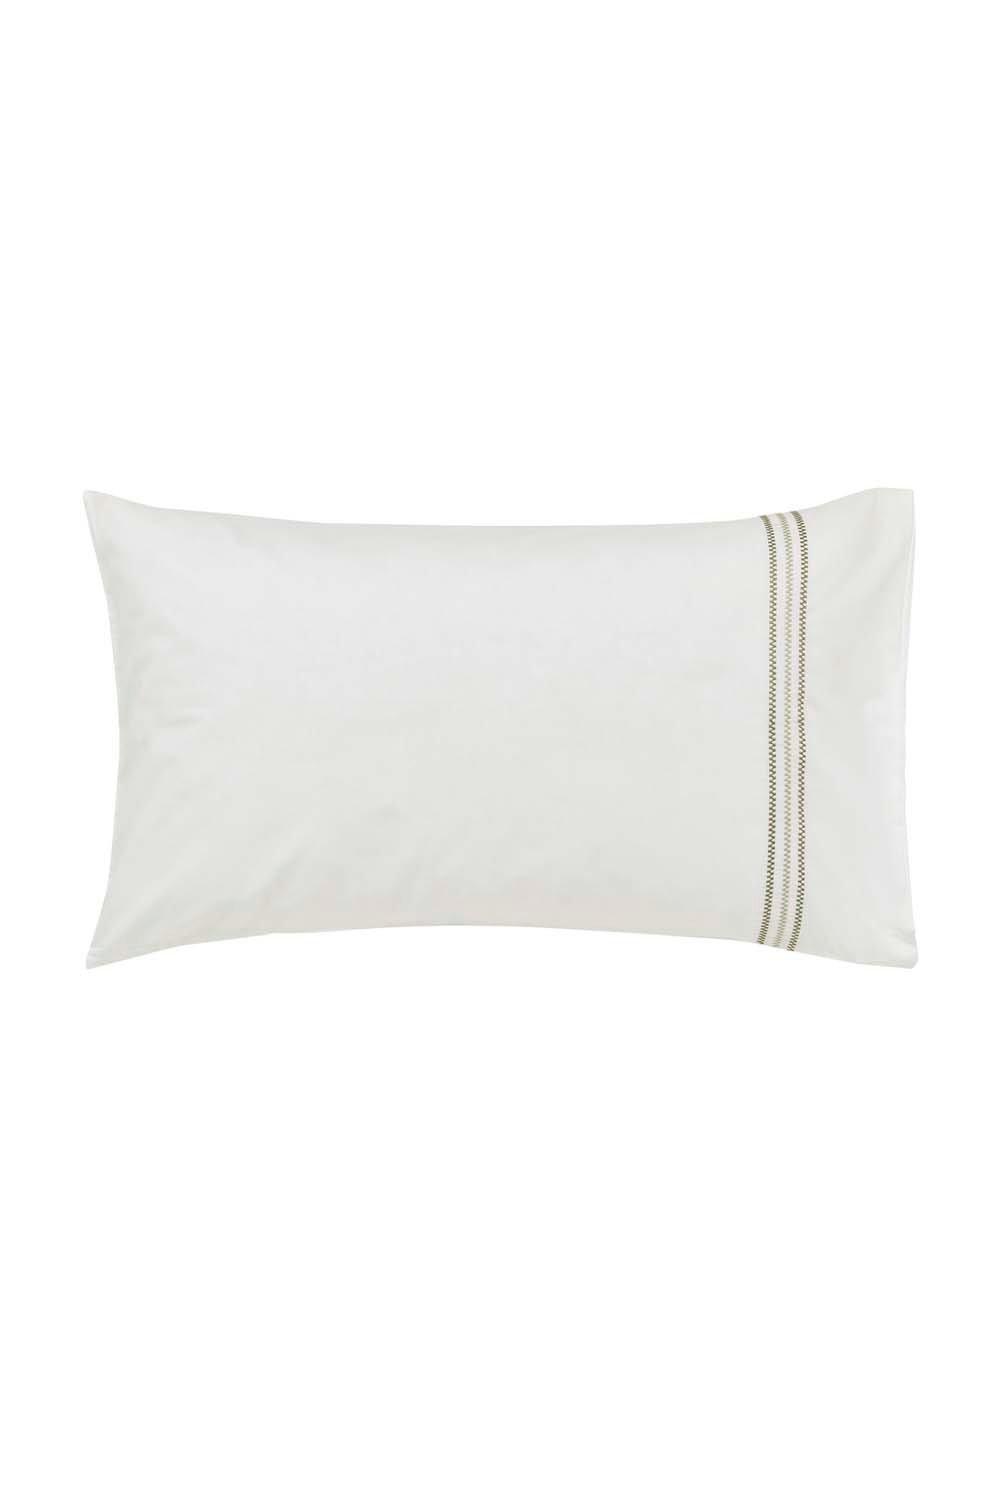 'Marie' Cotton Standard Pillowcase Pairs